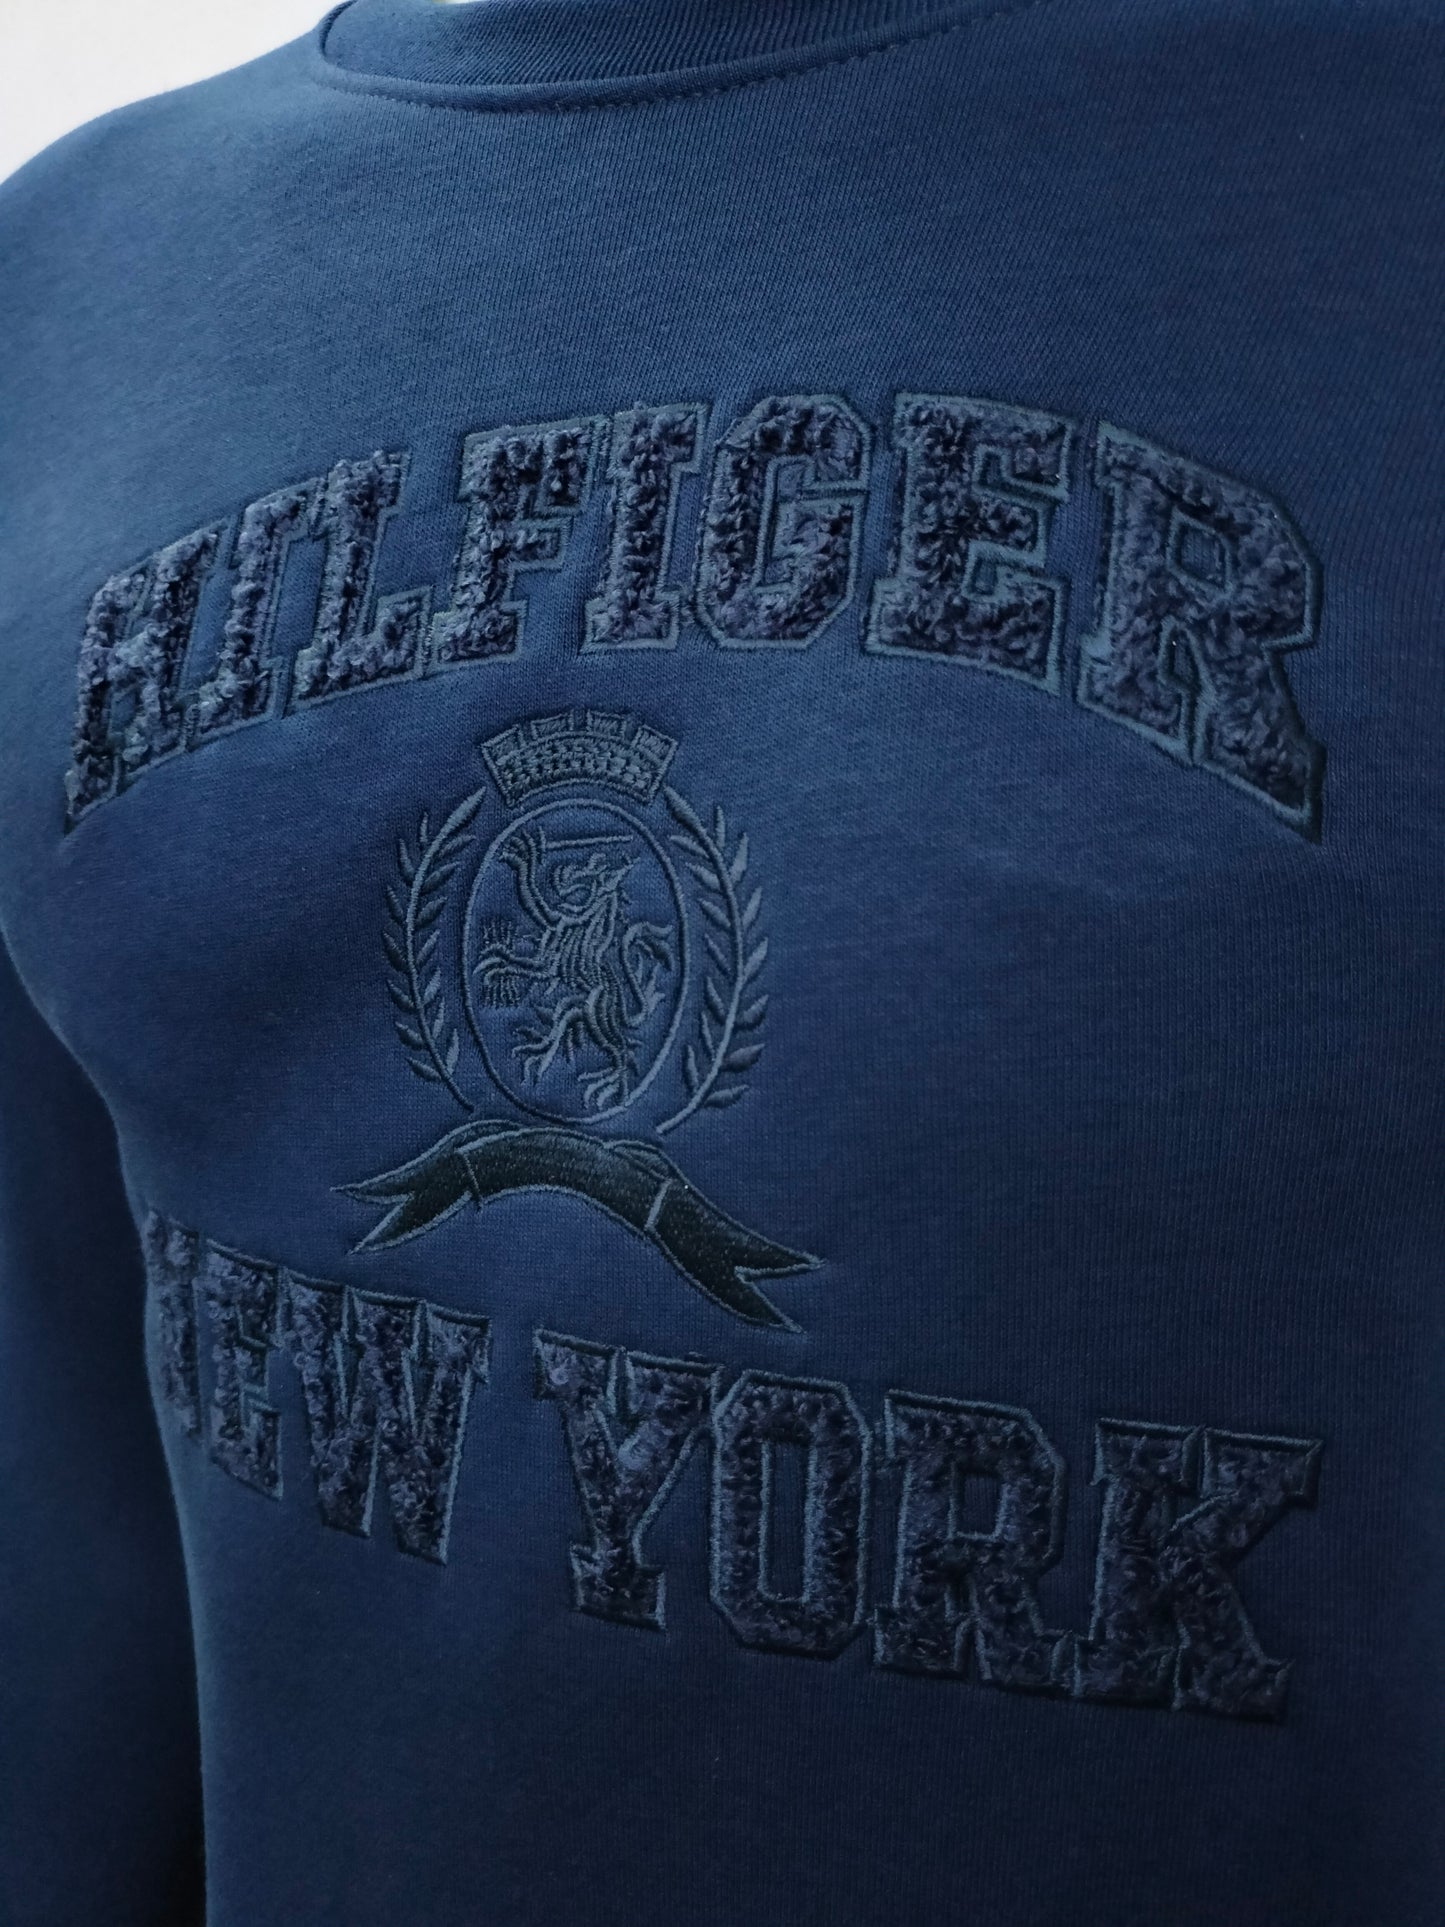 Tommy Hilfiger New York sweatshirt